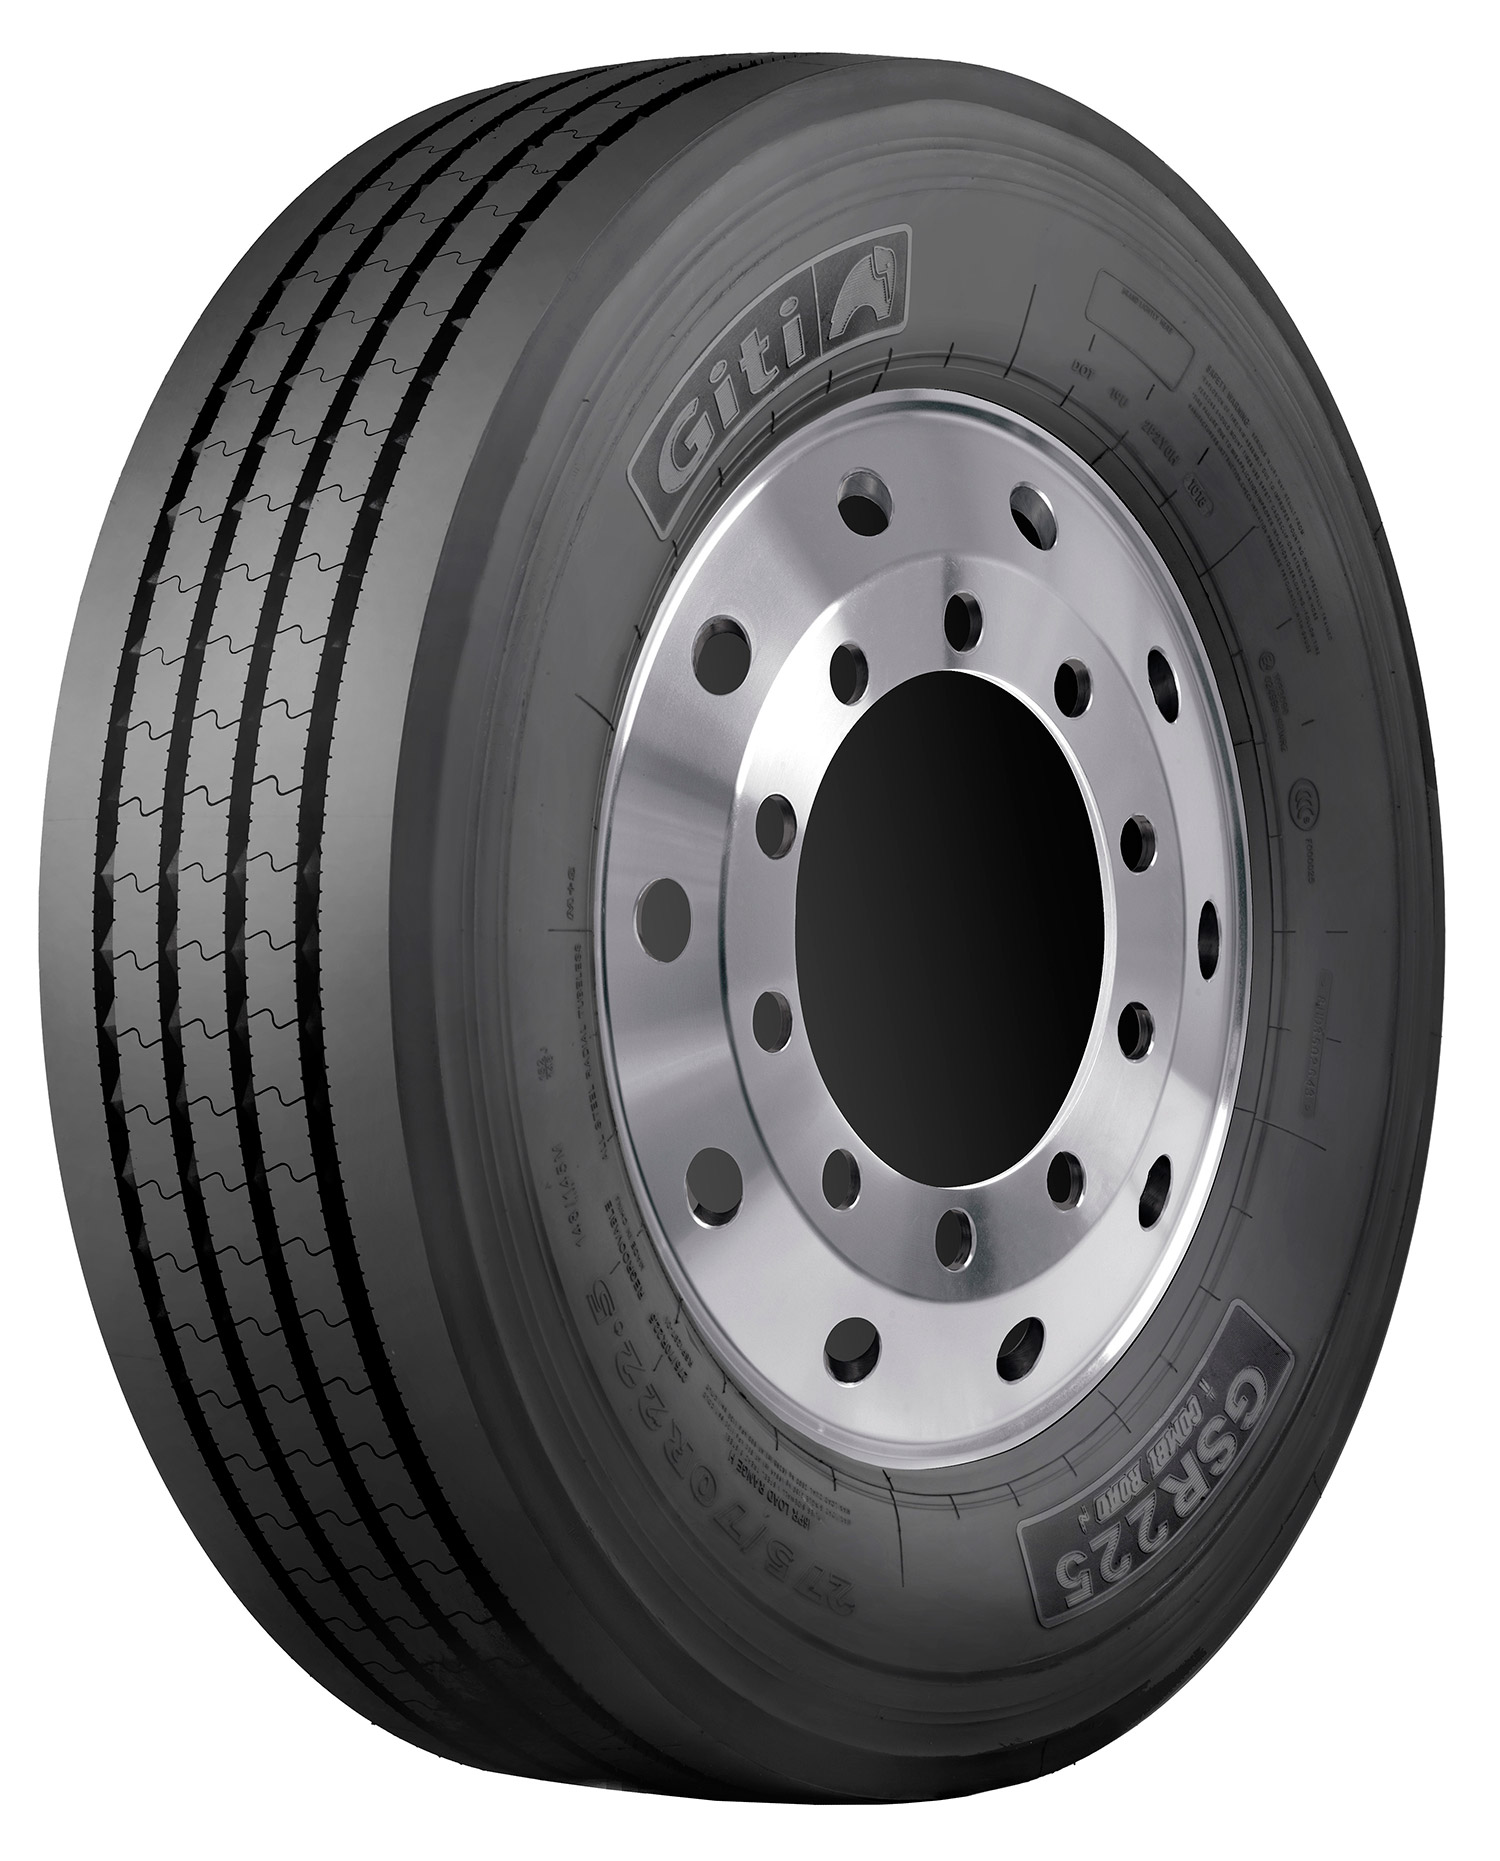 Giti GR225 all position urban/light duty commercial truck tire